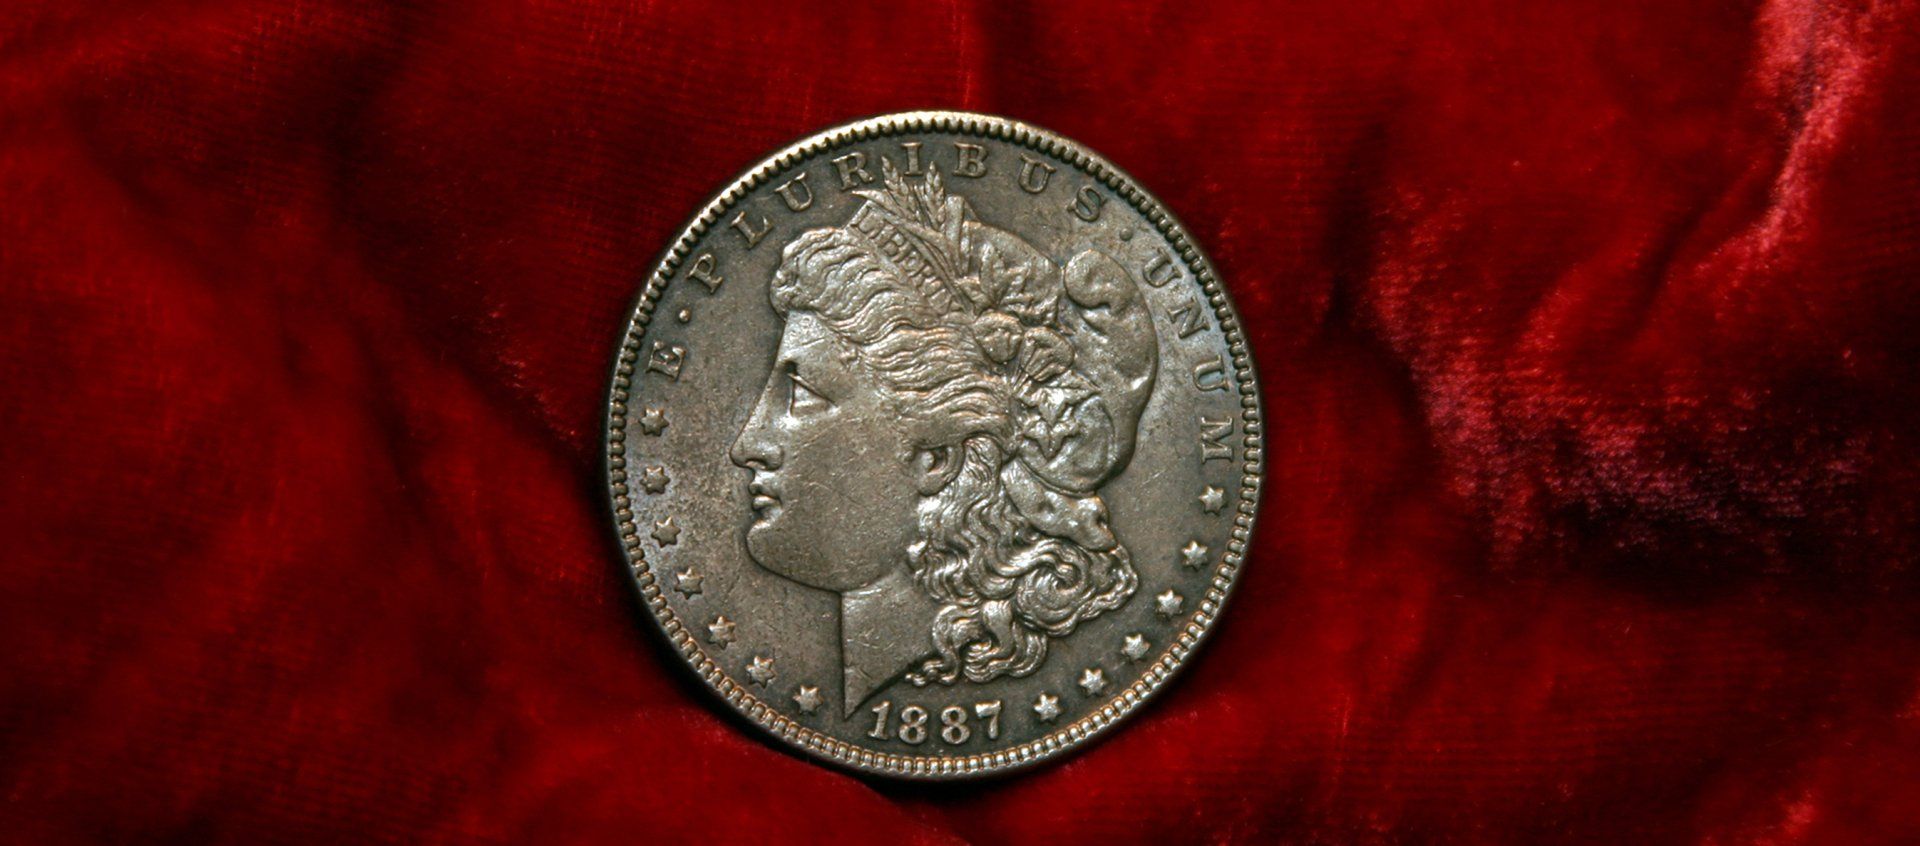 1887 Morgan silver dollar on red fabric